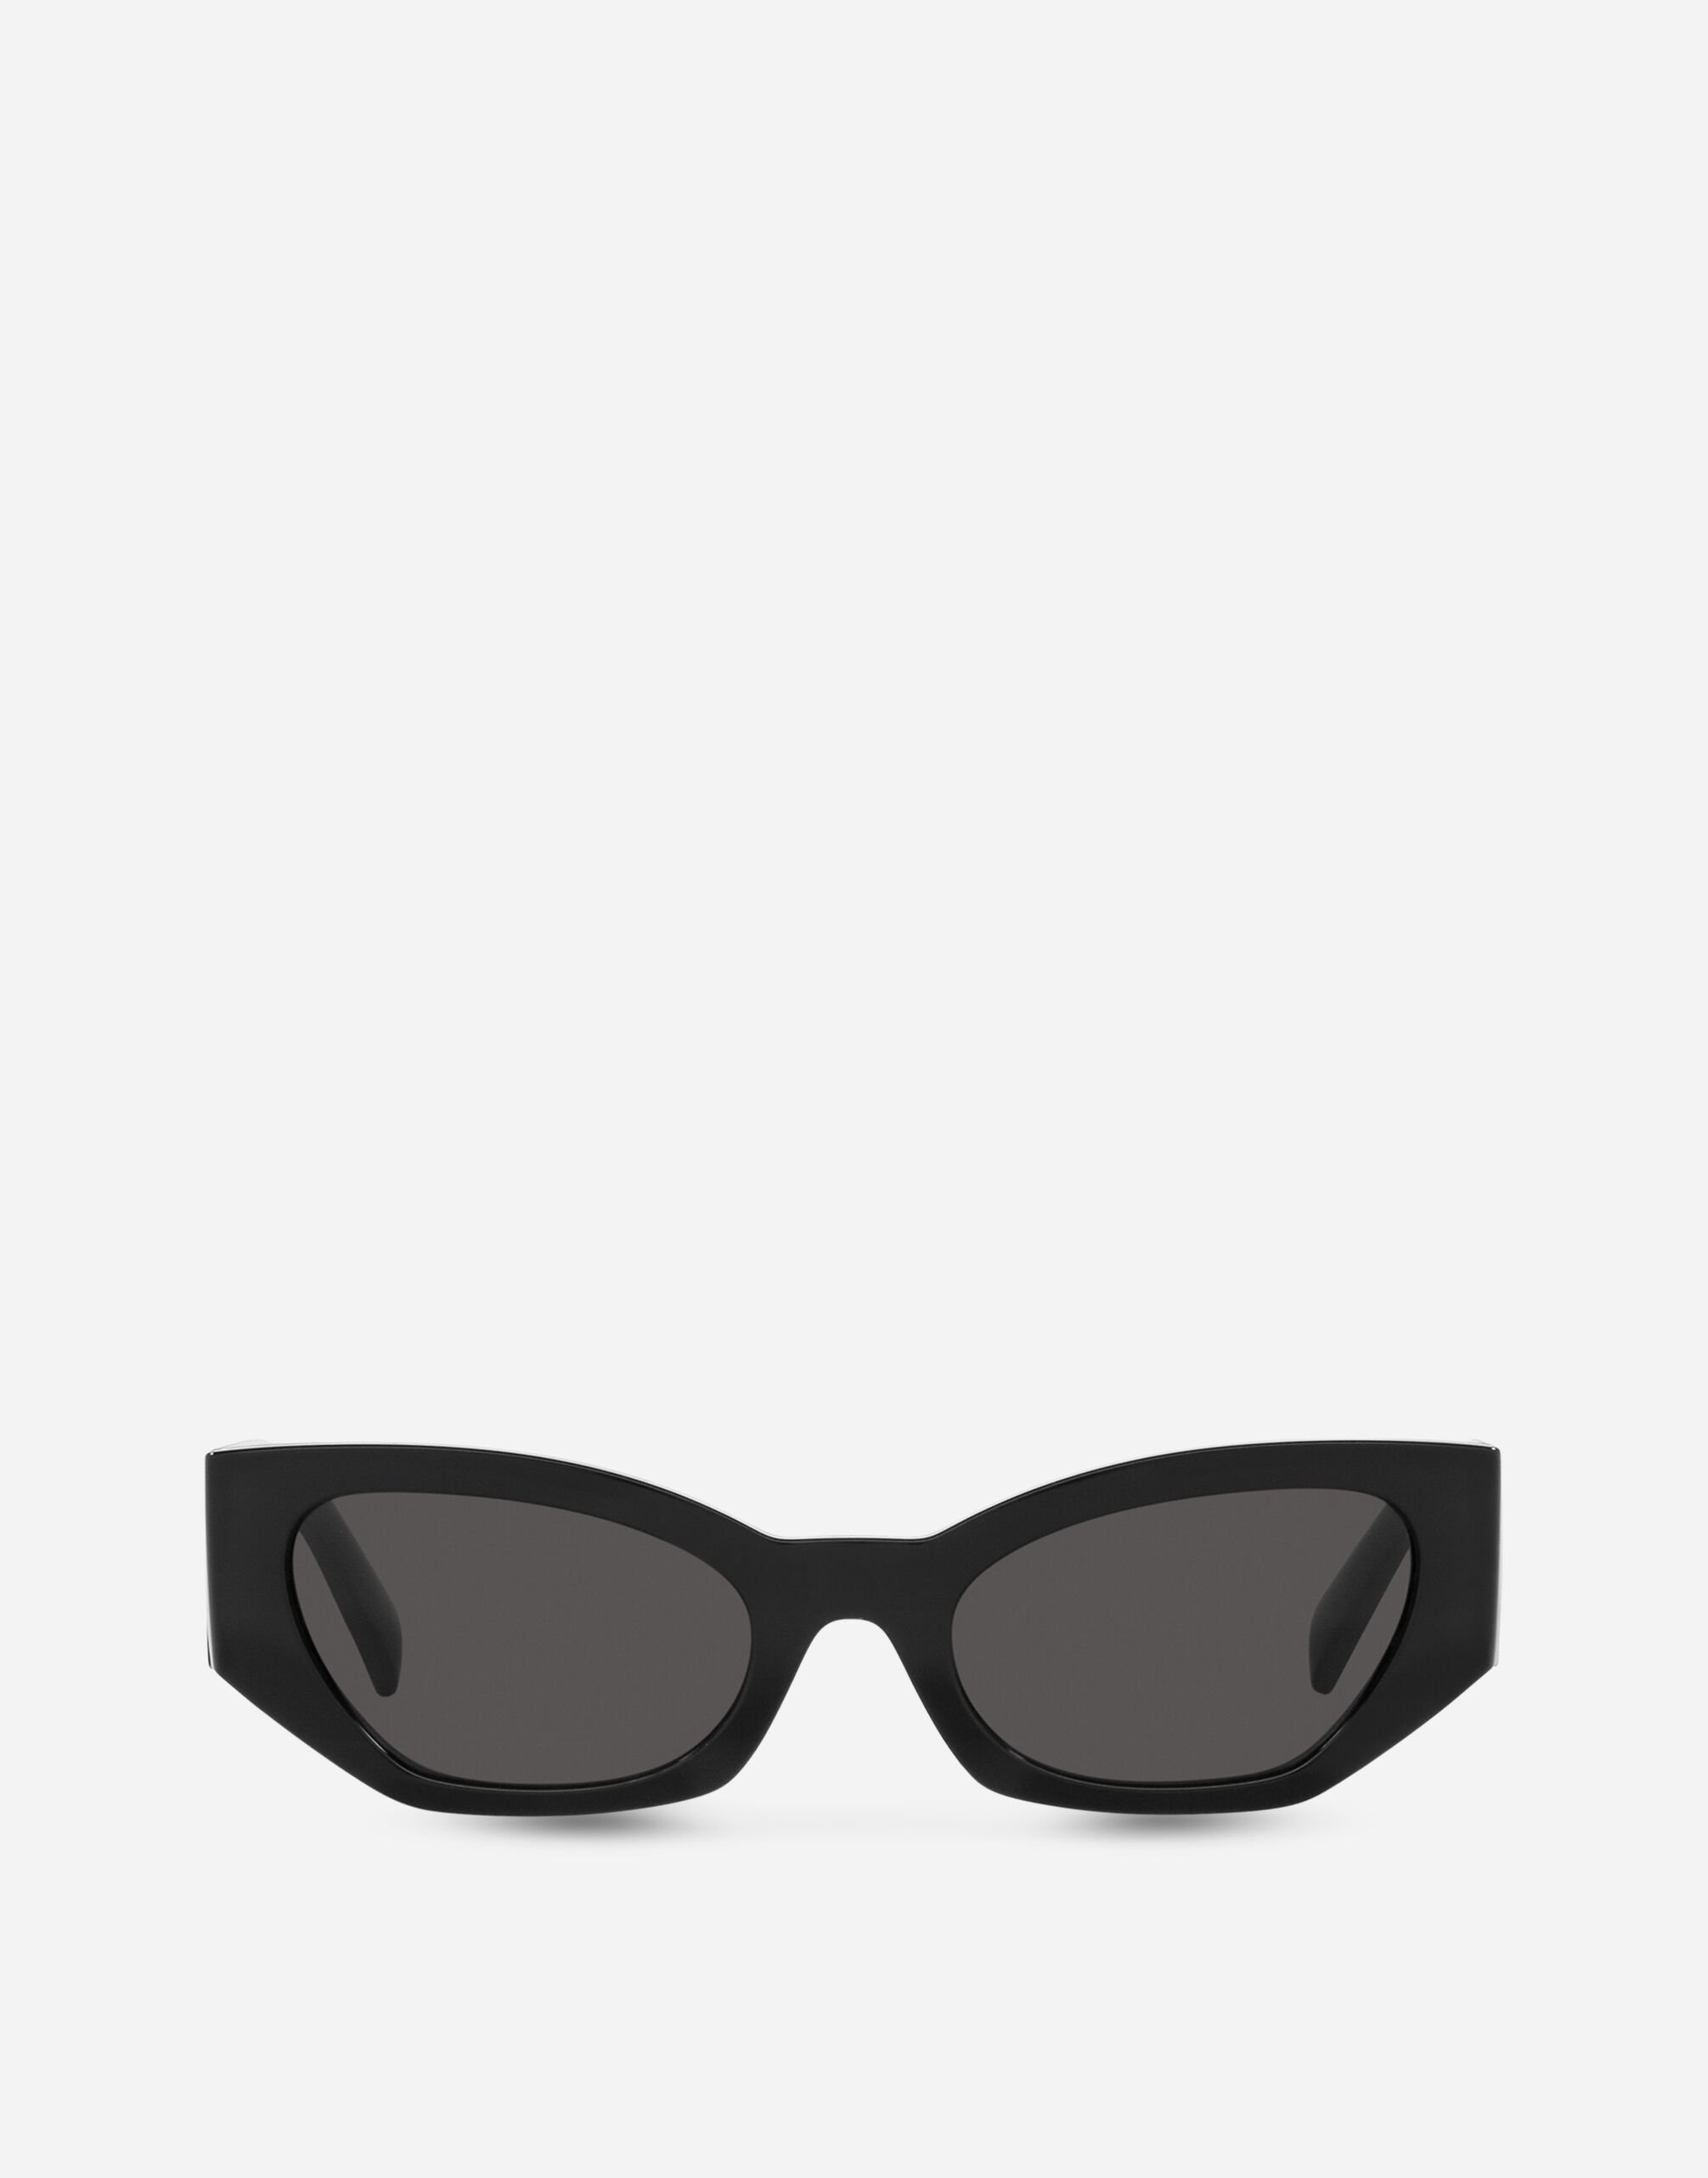 Dolce & Gabbana DG Elastic Sunglasses Black BI3149A1037